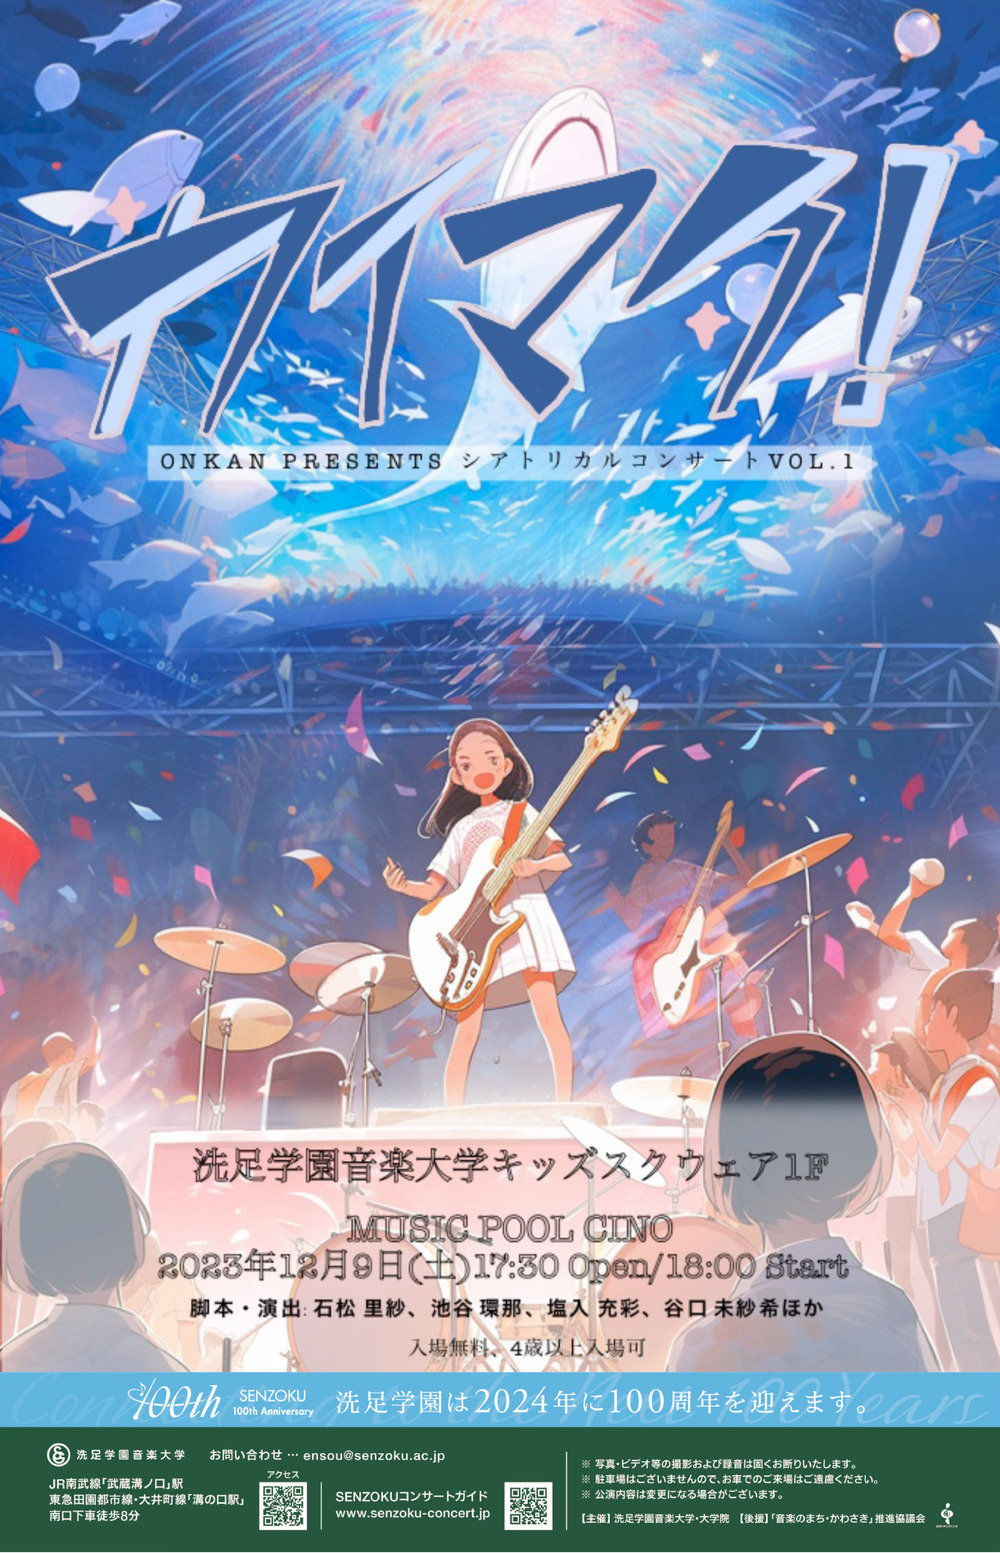 ONKAN Presents シアトリカルコンサートVOL.1『カイマク！』【洗足学園 